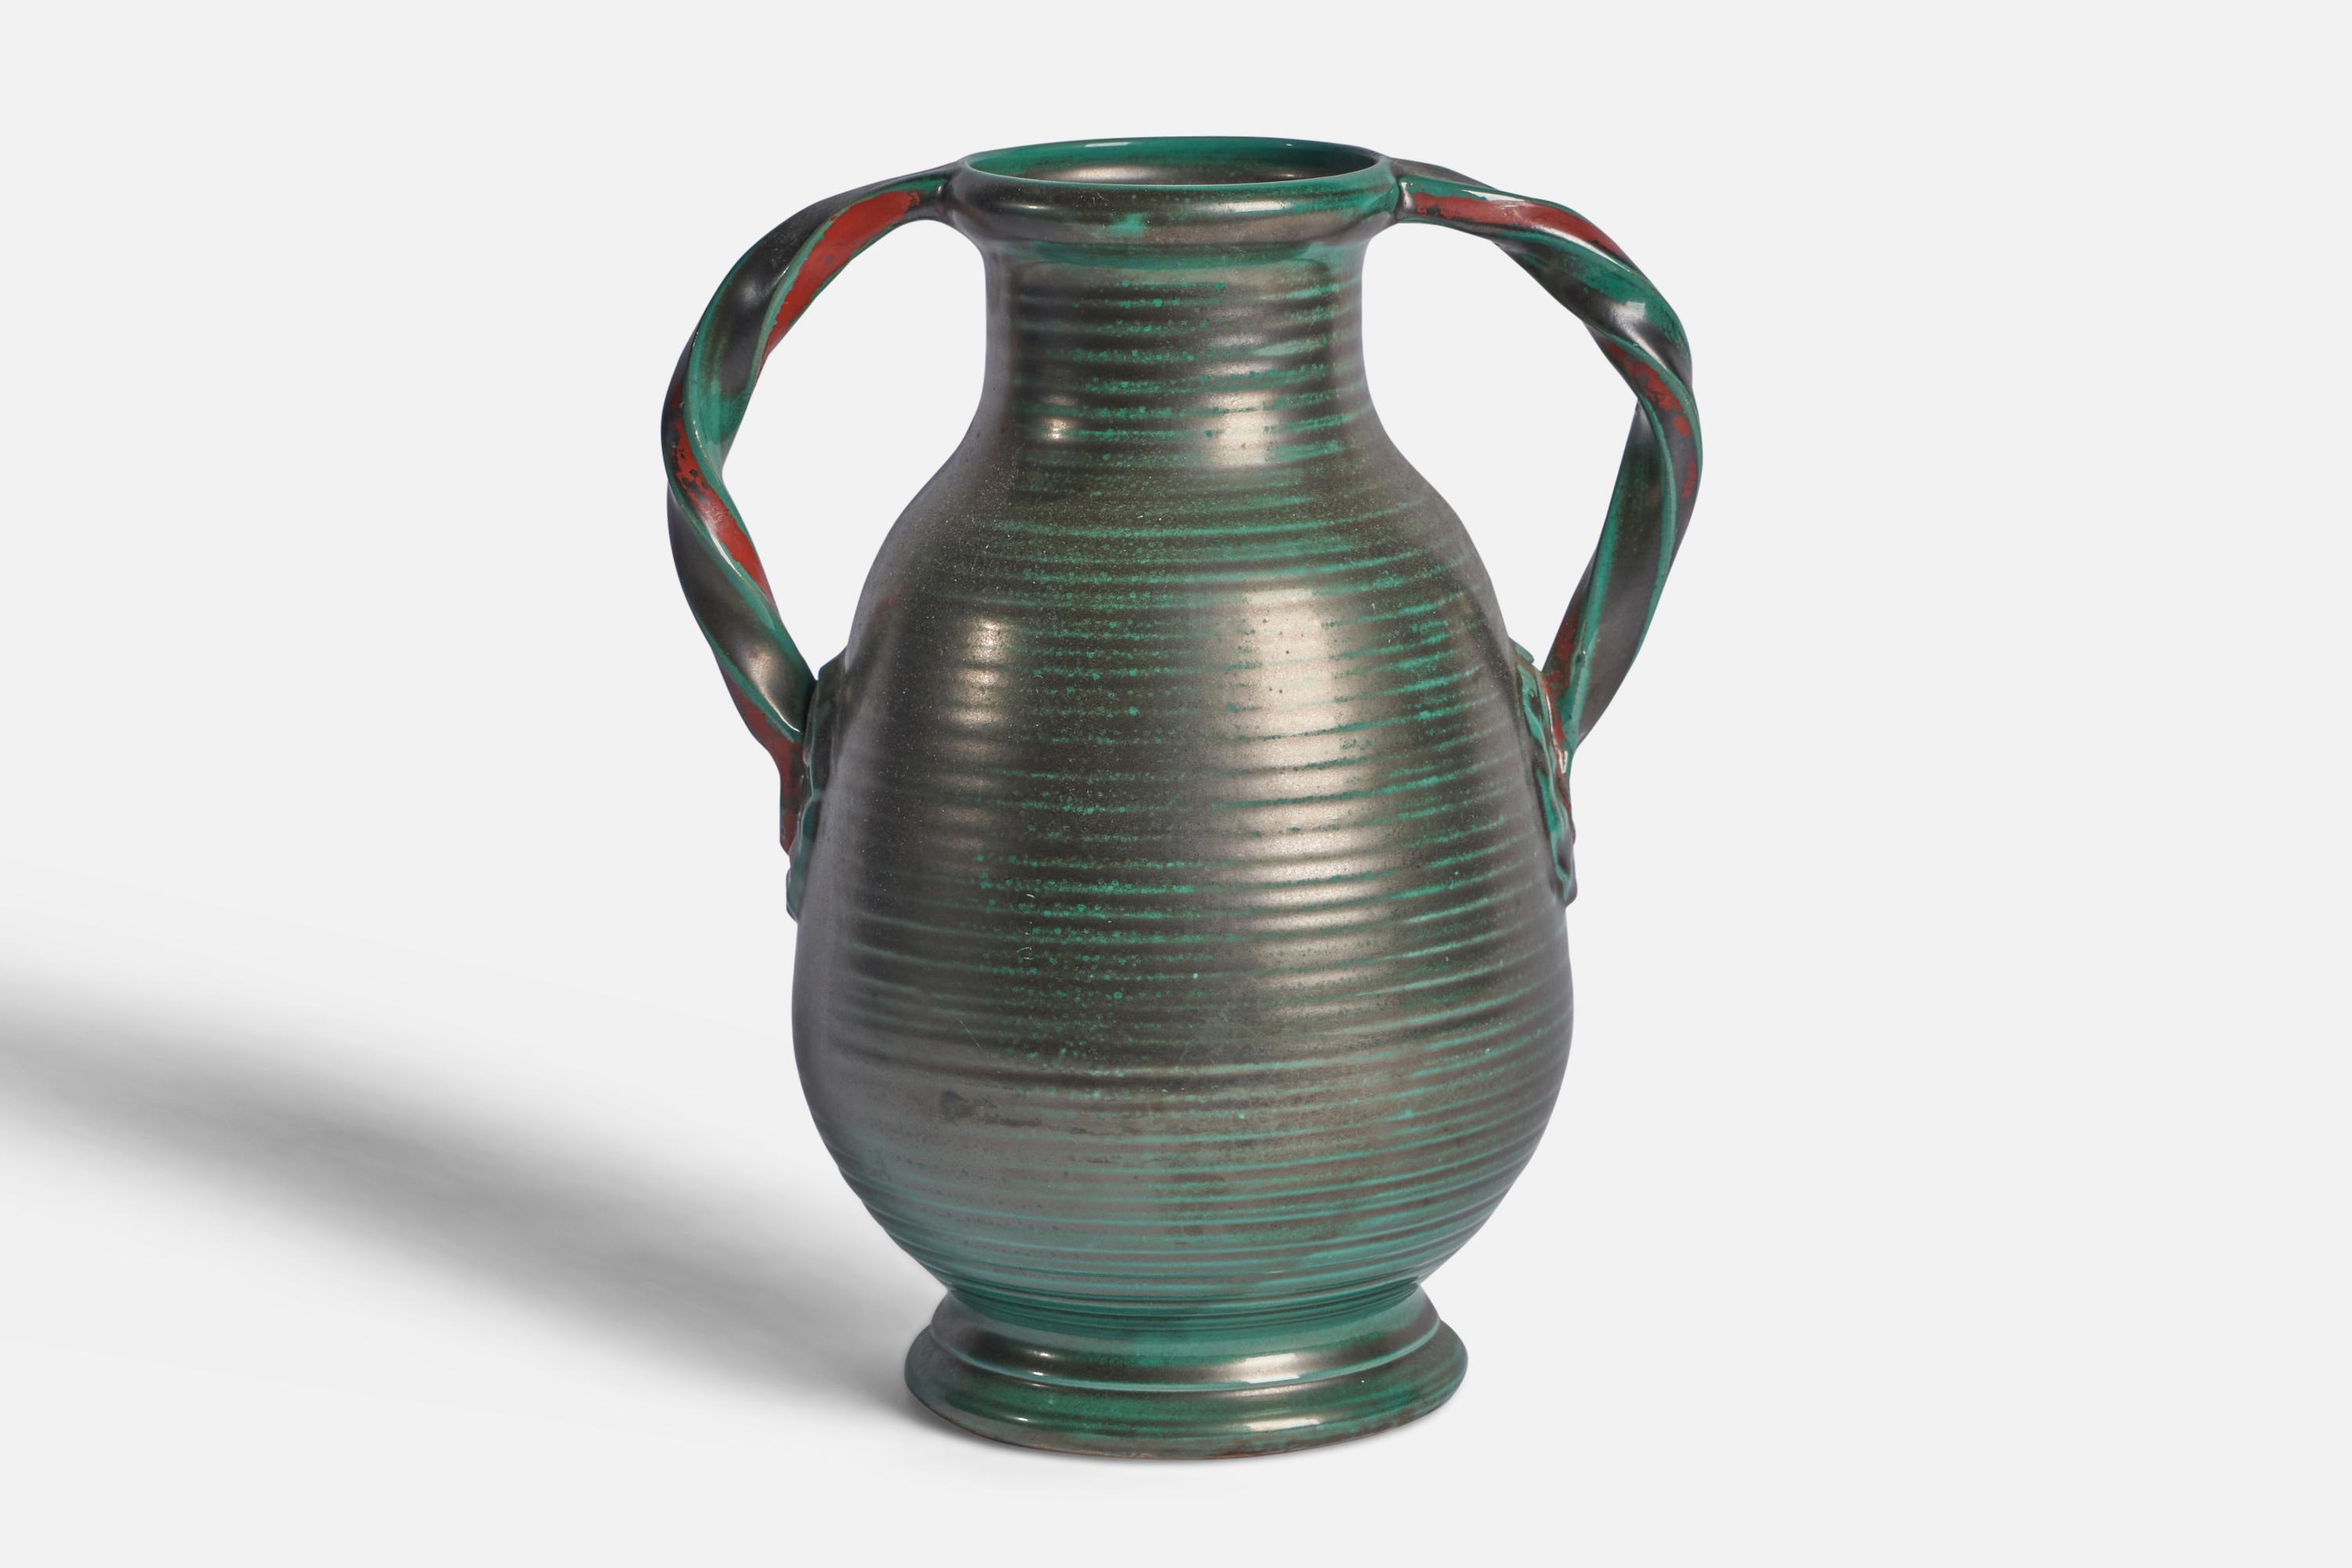 A green orange-glazed and incised earthenware vase designed and produced by Upsala Ekeby, Sweden, 1930s.